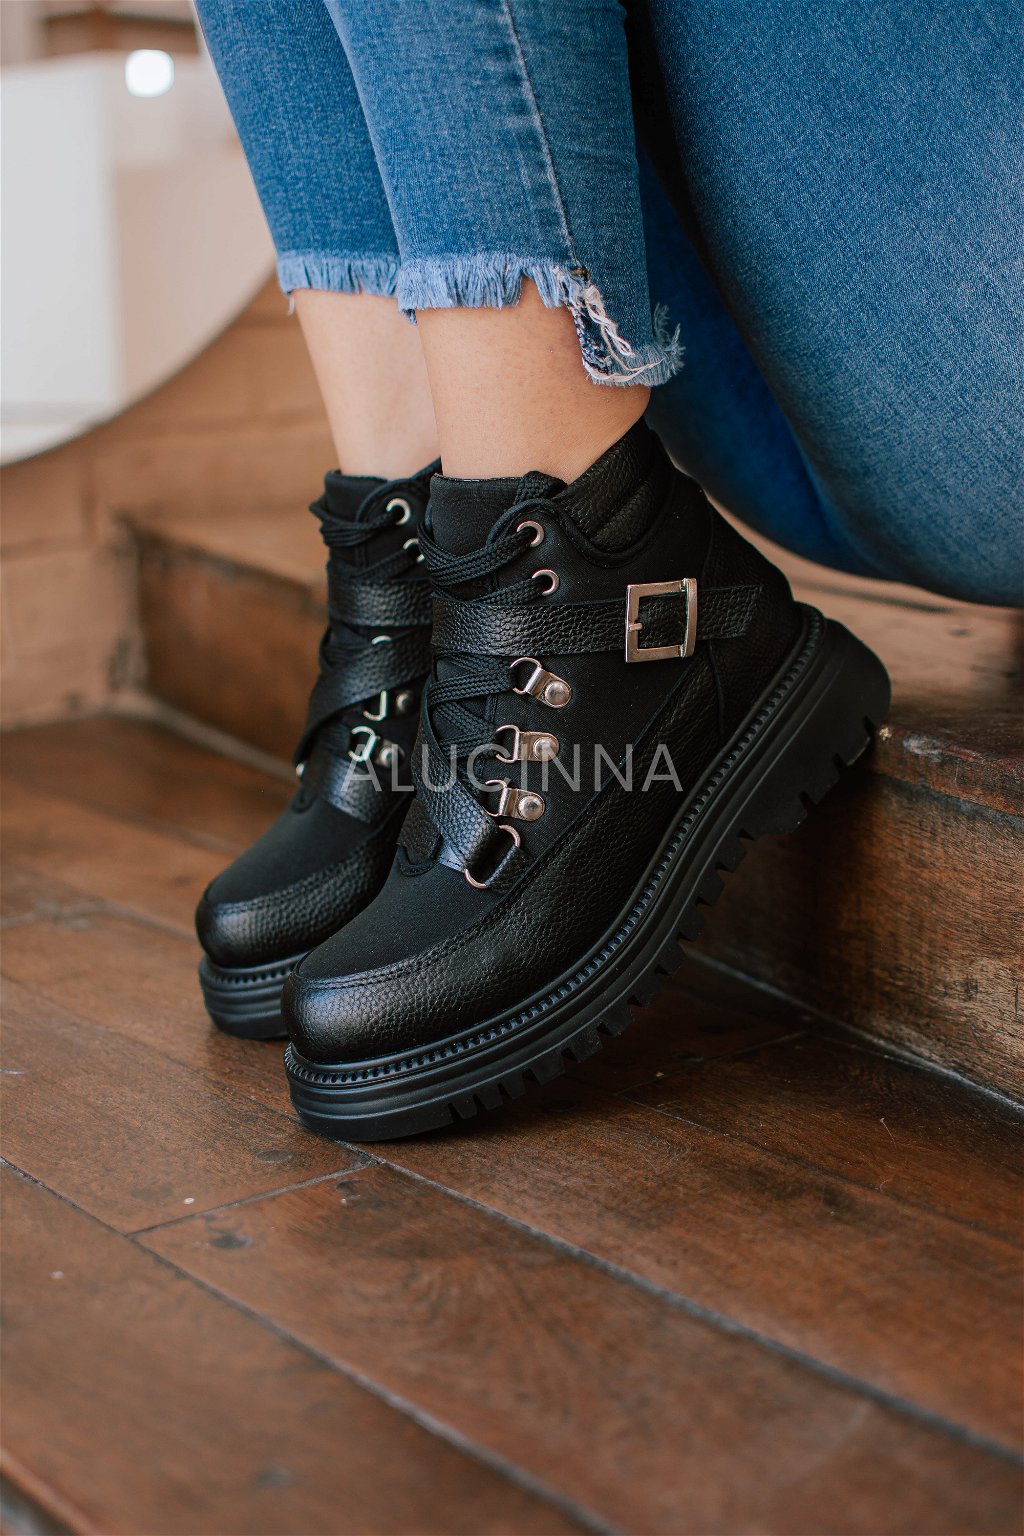 erosión Faial Negligencia Rusia Negro - Alucinna Trendy Shoes